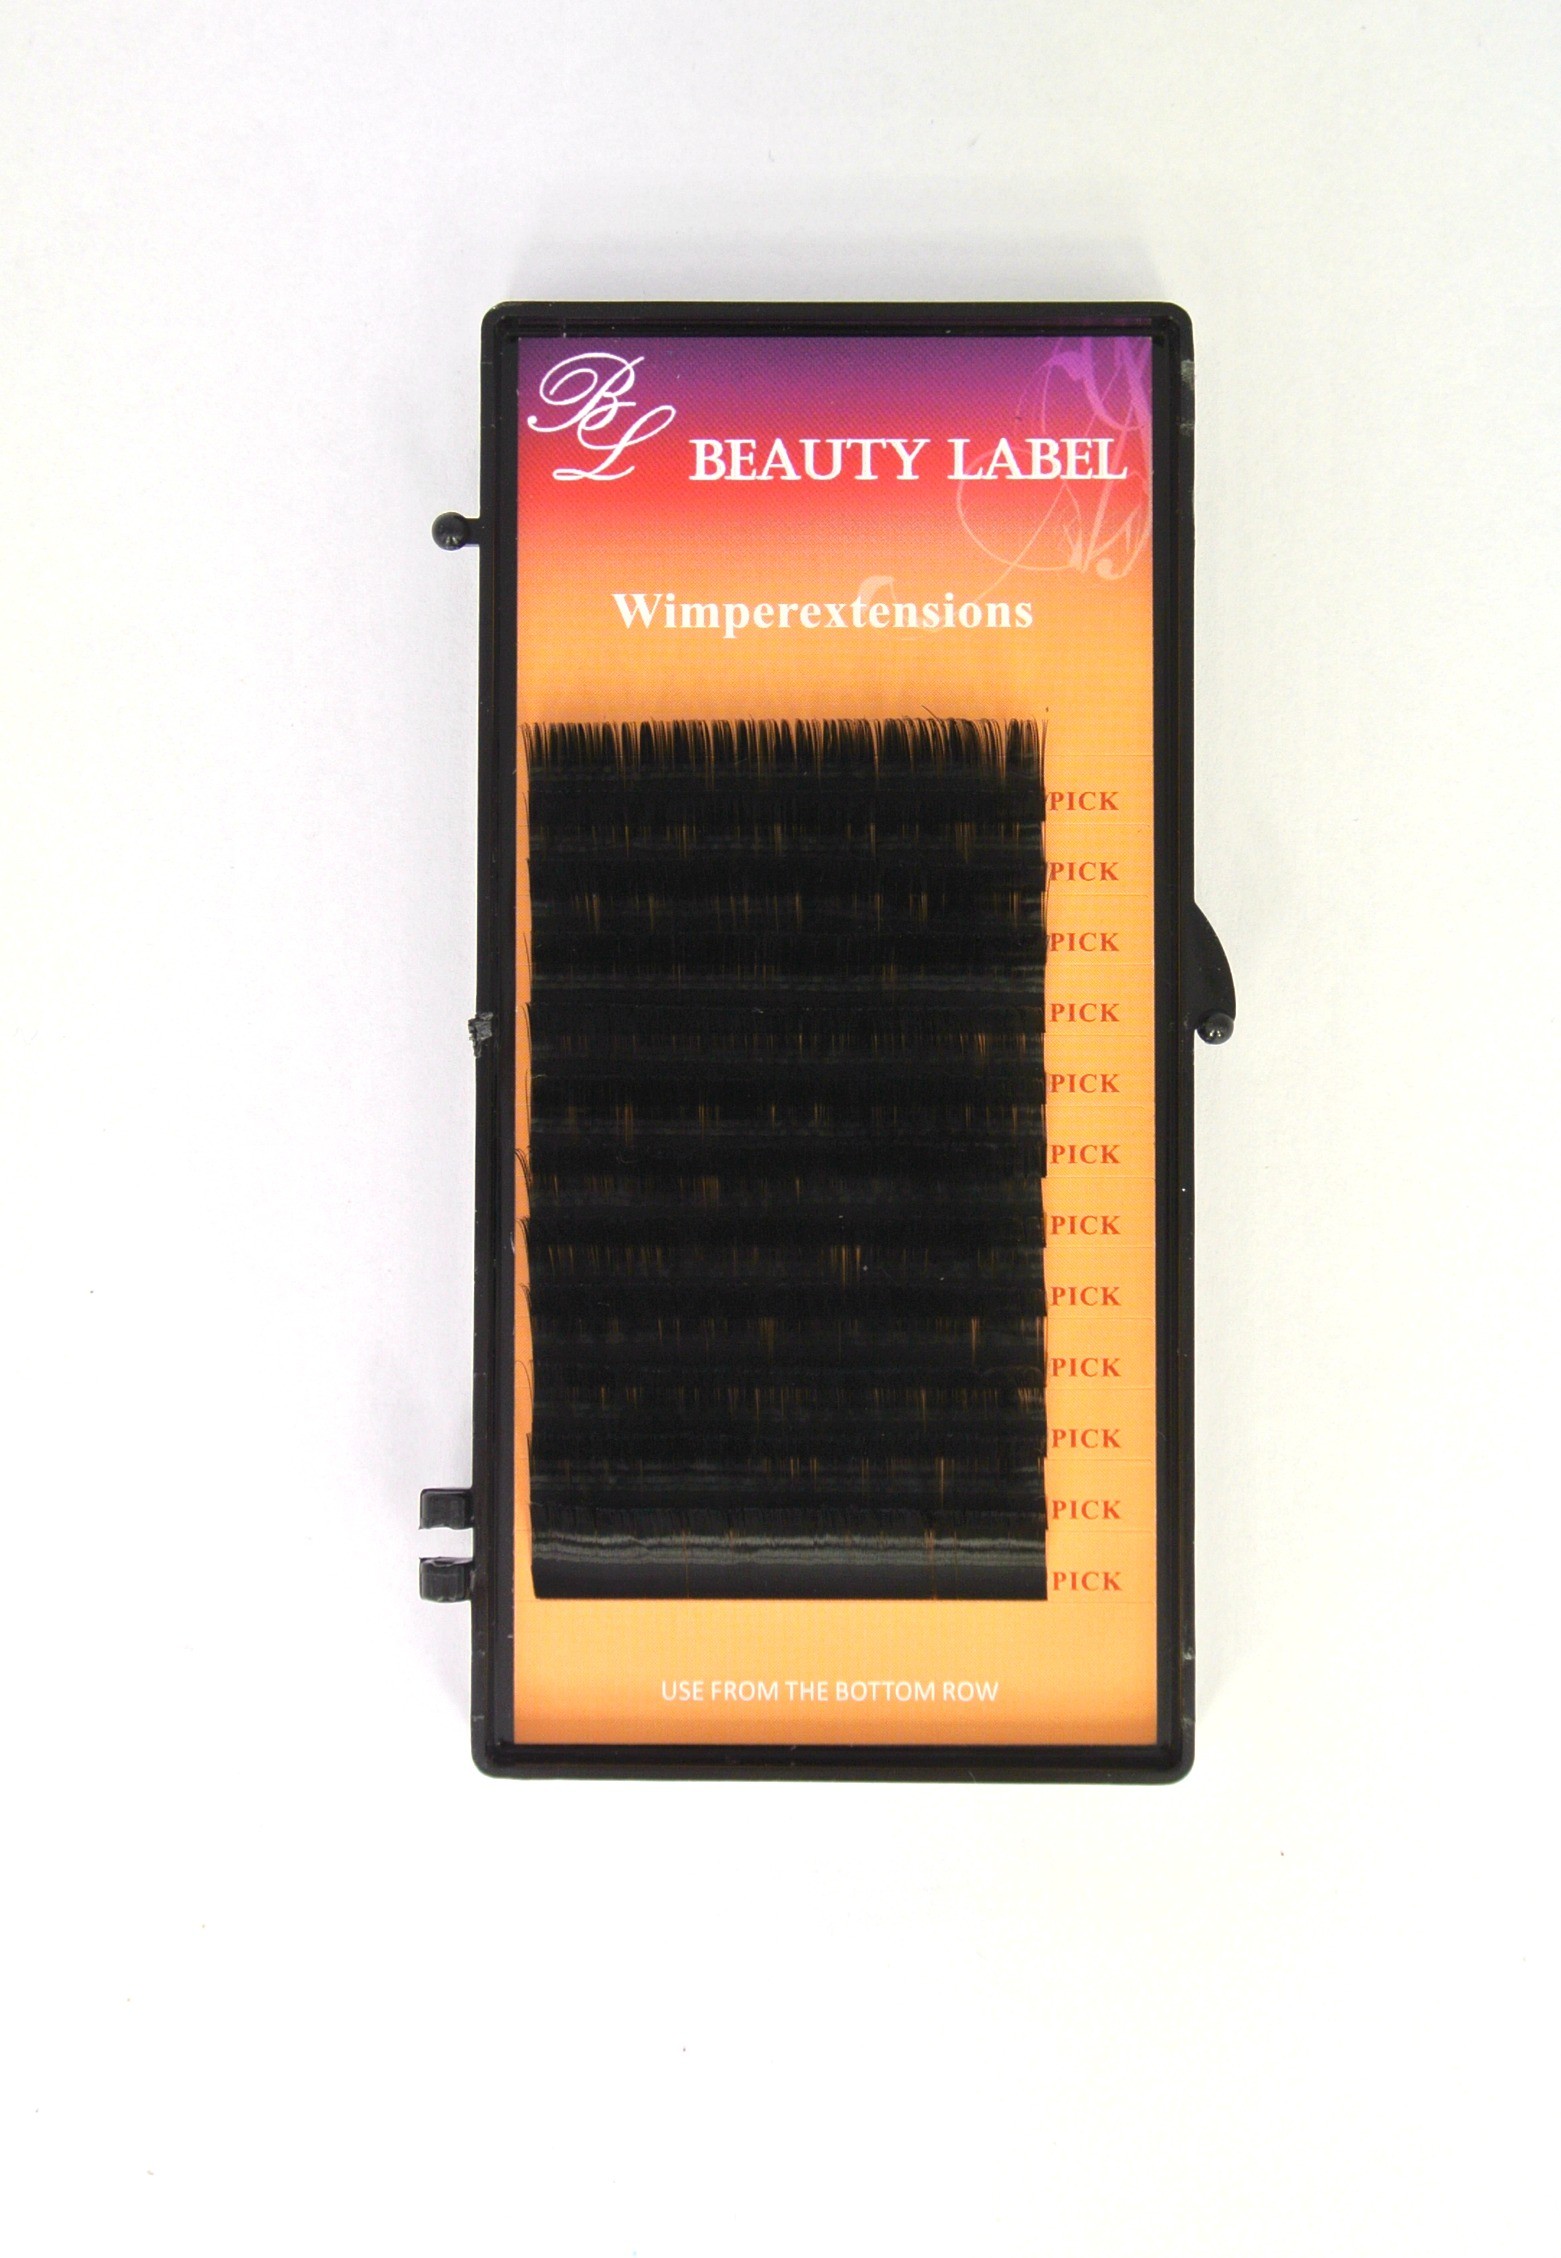 Beauty Label B krul super zachte volume wimpers voor de proffesionele wimperstyliste te gebruiken.